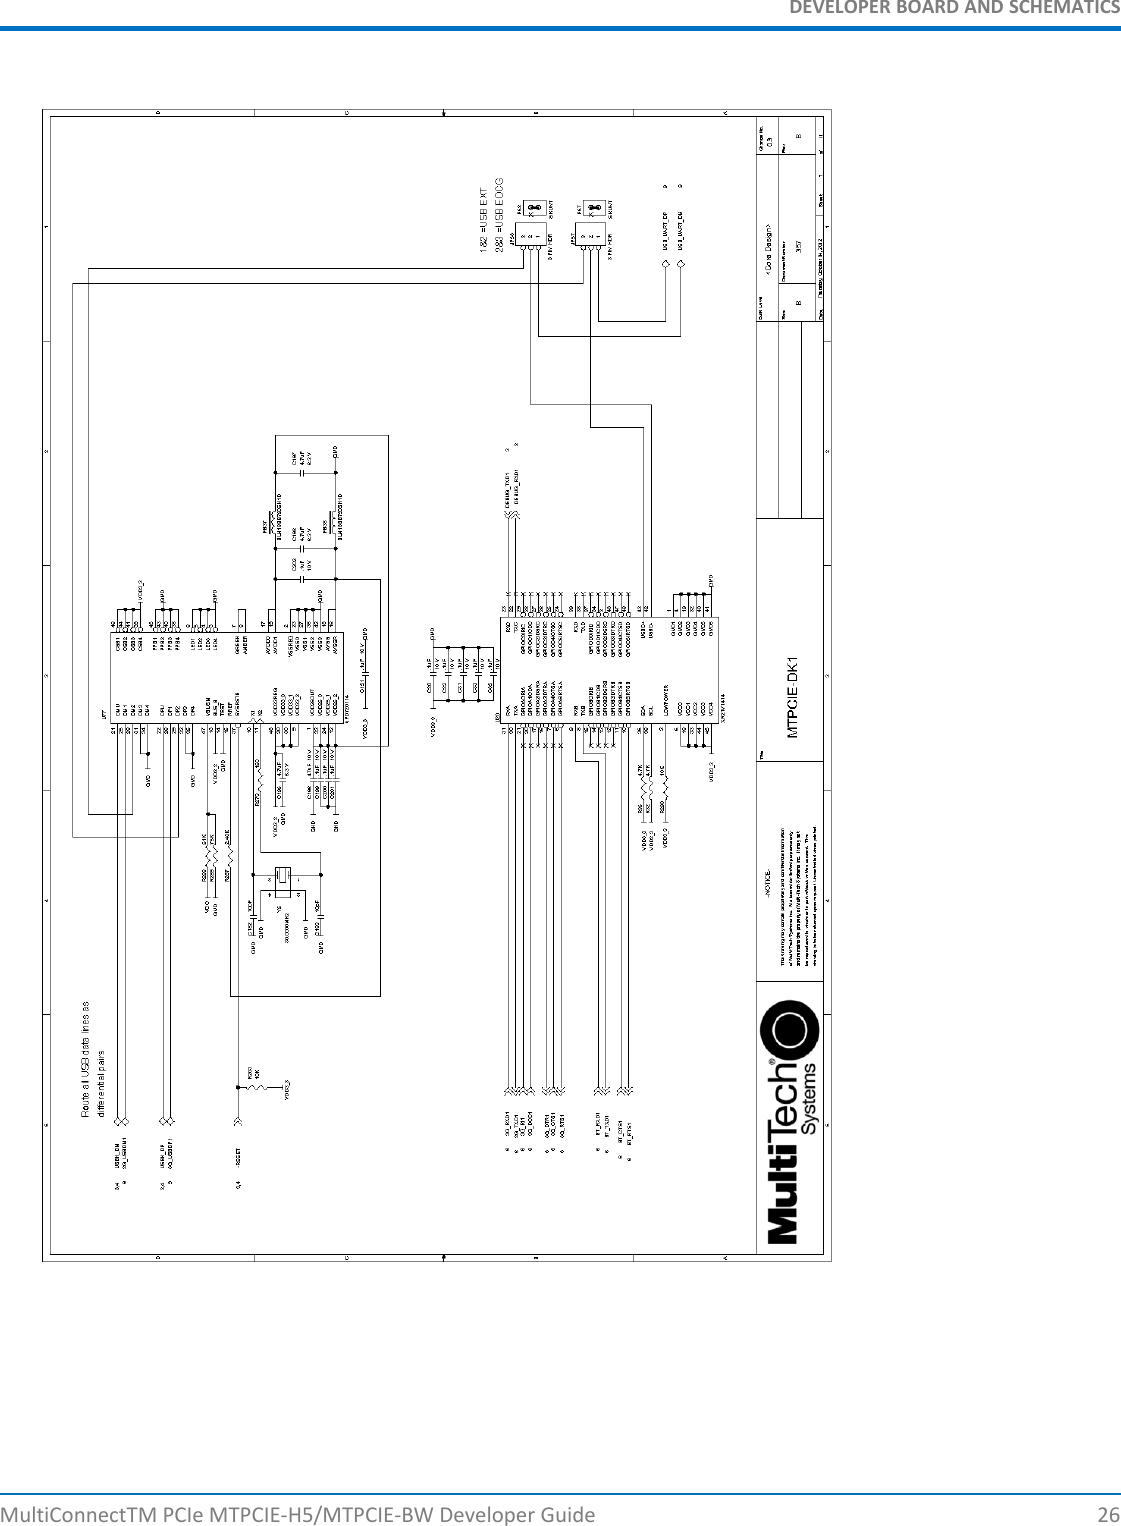 DEVELOPER BOARD AND SCHEMATICSMultiConnectTM PCIe MTPCIE-H5/MTPCIE-BW Developer Guide 26